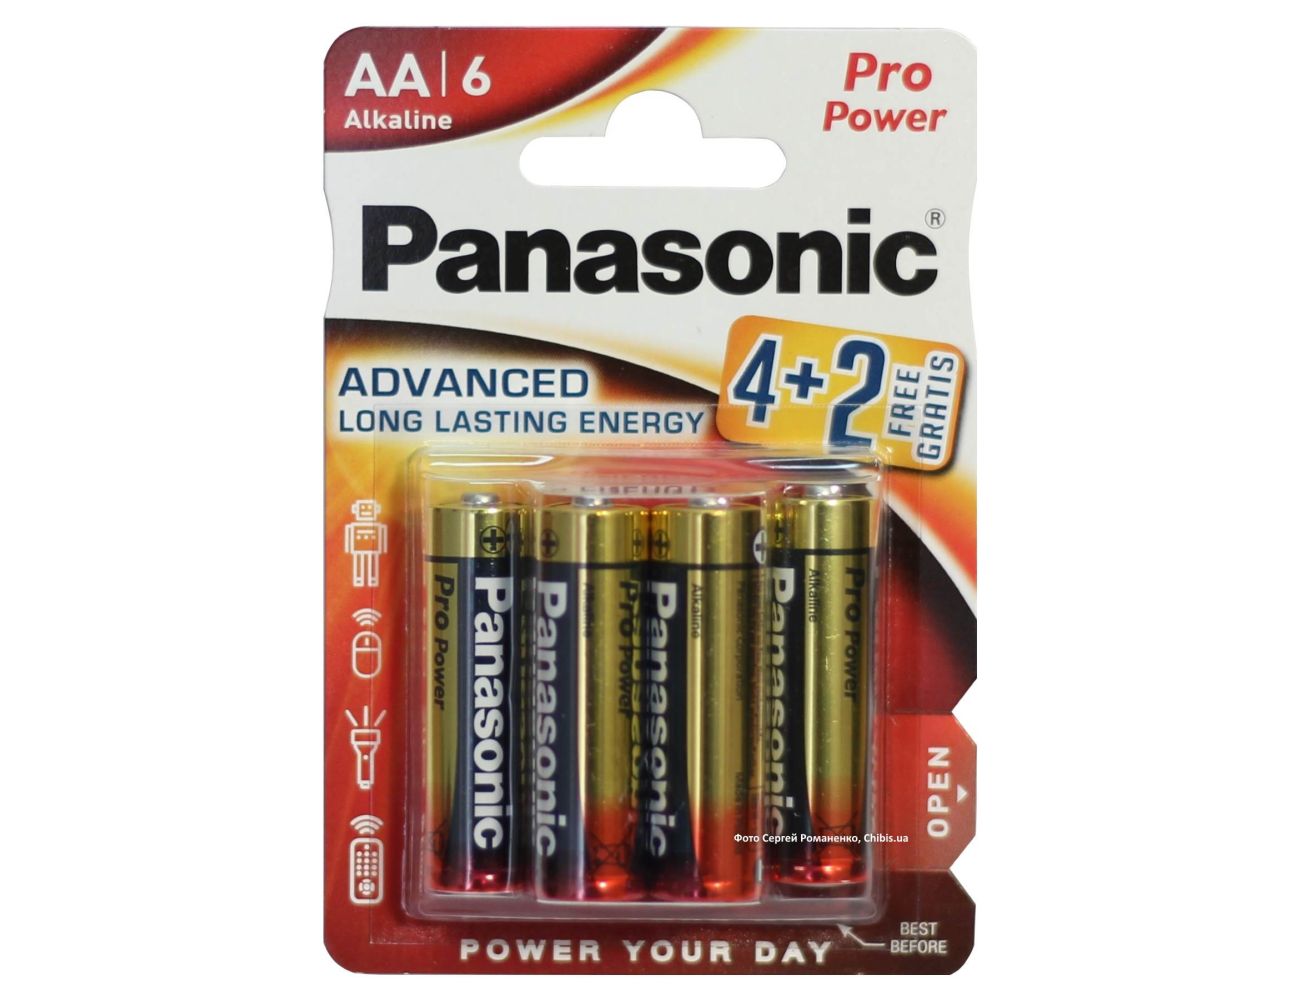 Батарейка Panasonic AA Pro Power Alkaline 1.5V LR6PPG/6BP 4-2F блистер 6 шт (4+2)